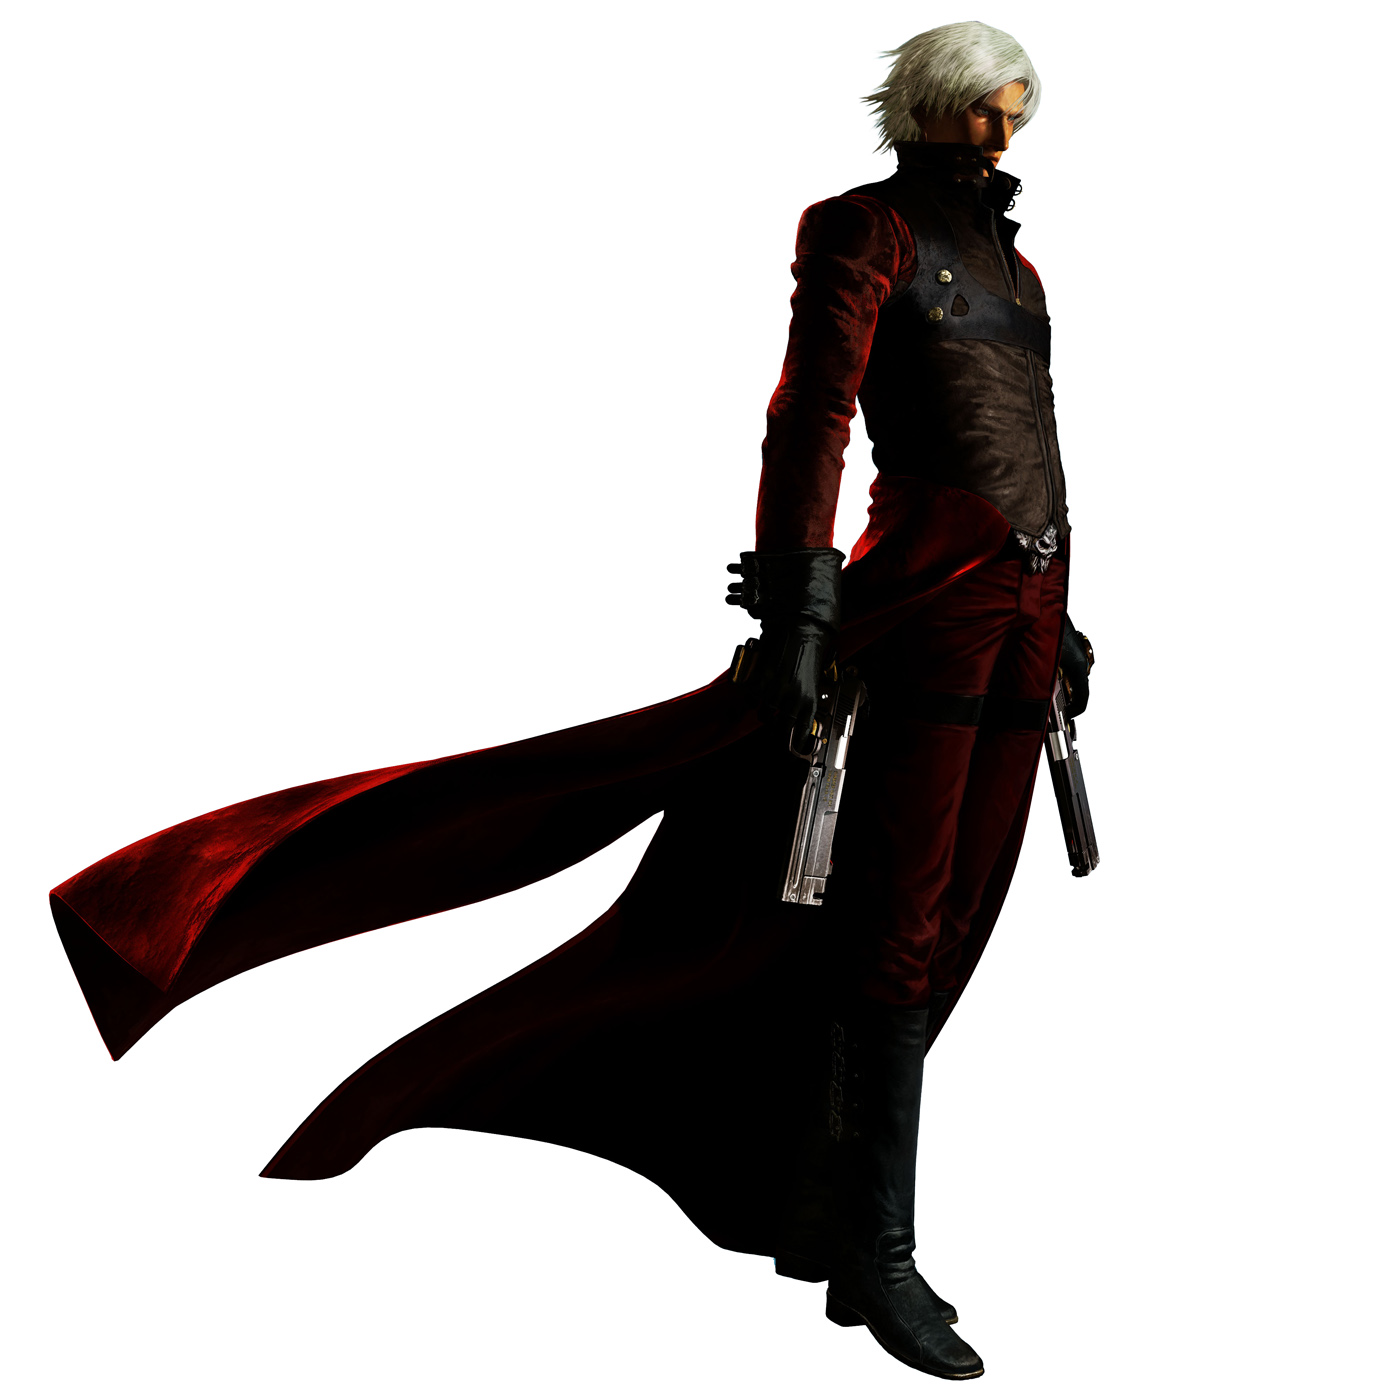 Dante (Dante Sparda) - Superhero Database